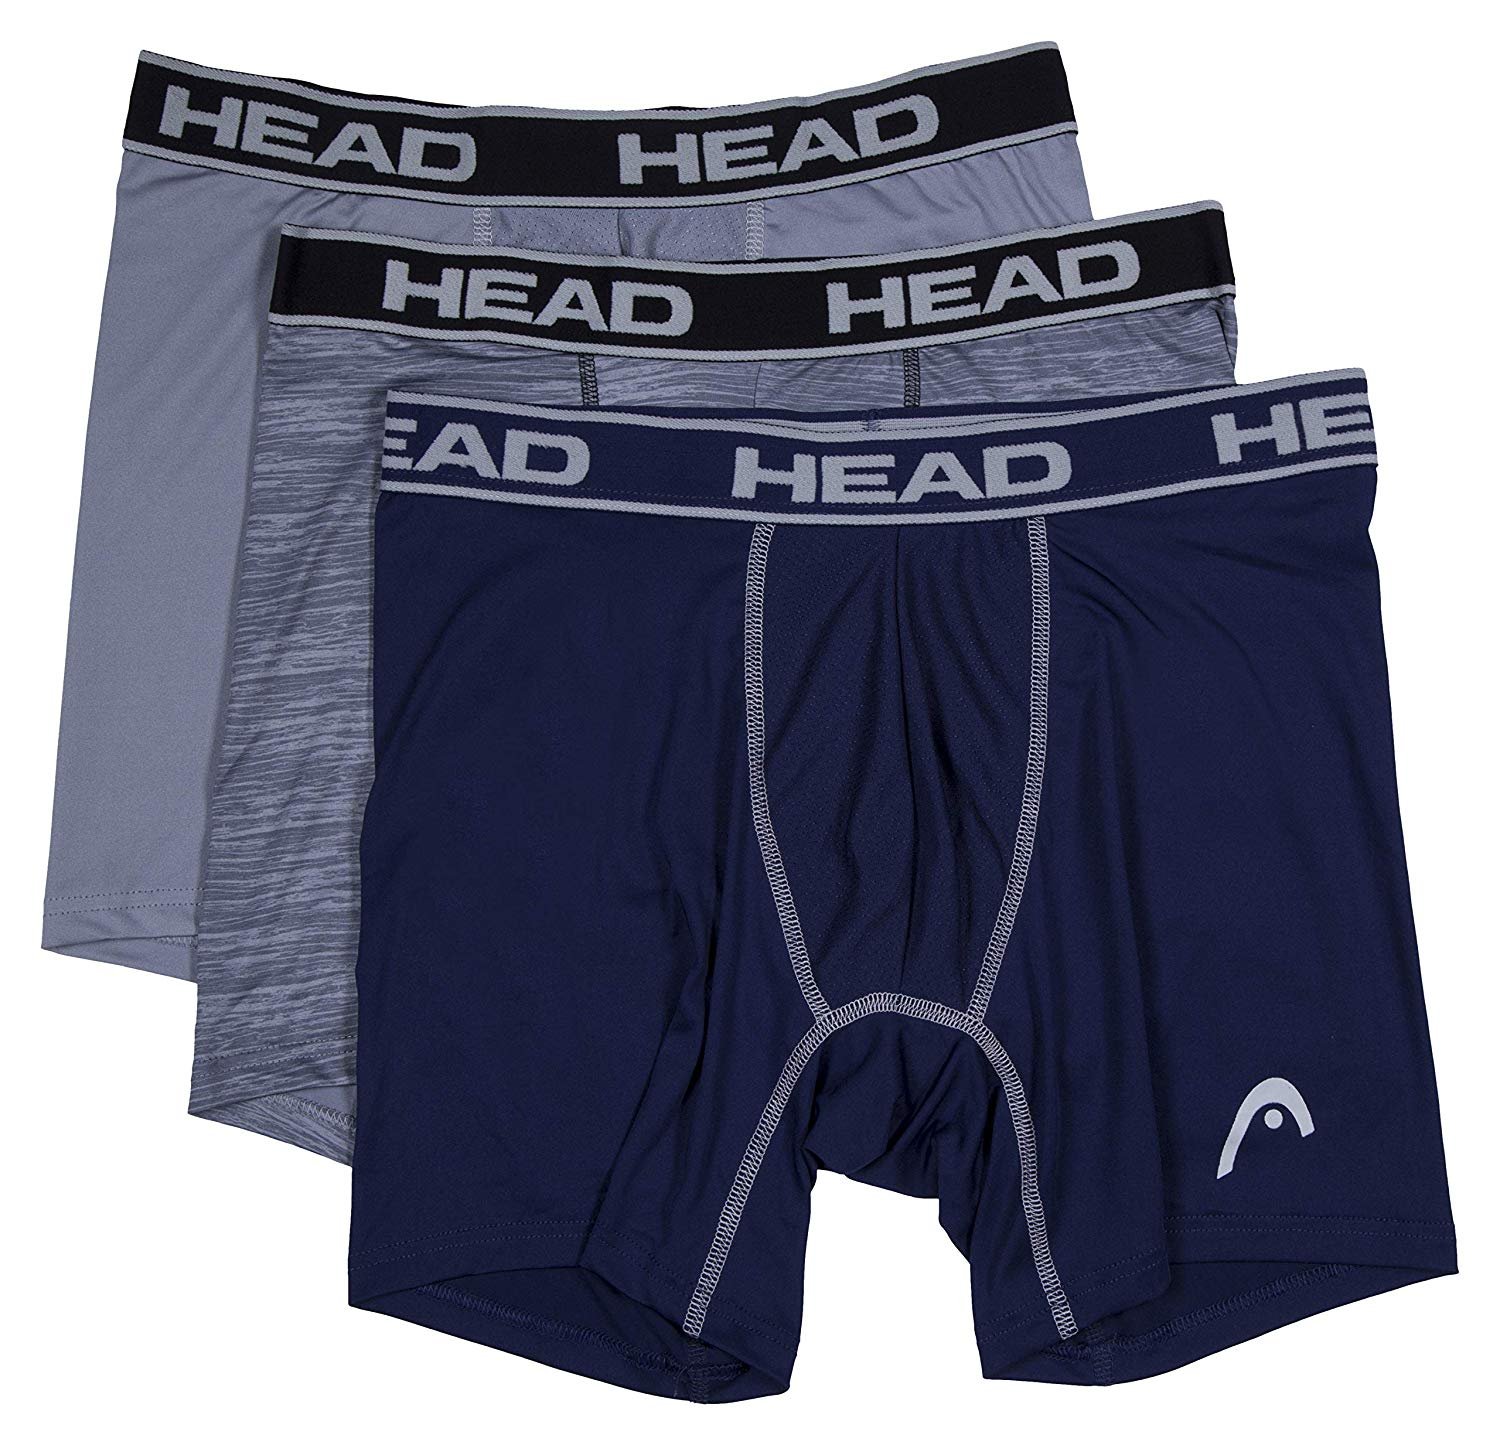 HEAD Mens Performance Underwear 3-PACK Boxer Briefs S-5XL Polyester/Spandex